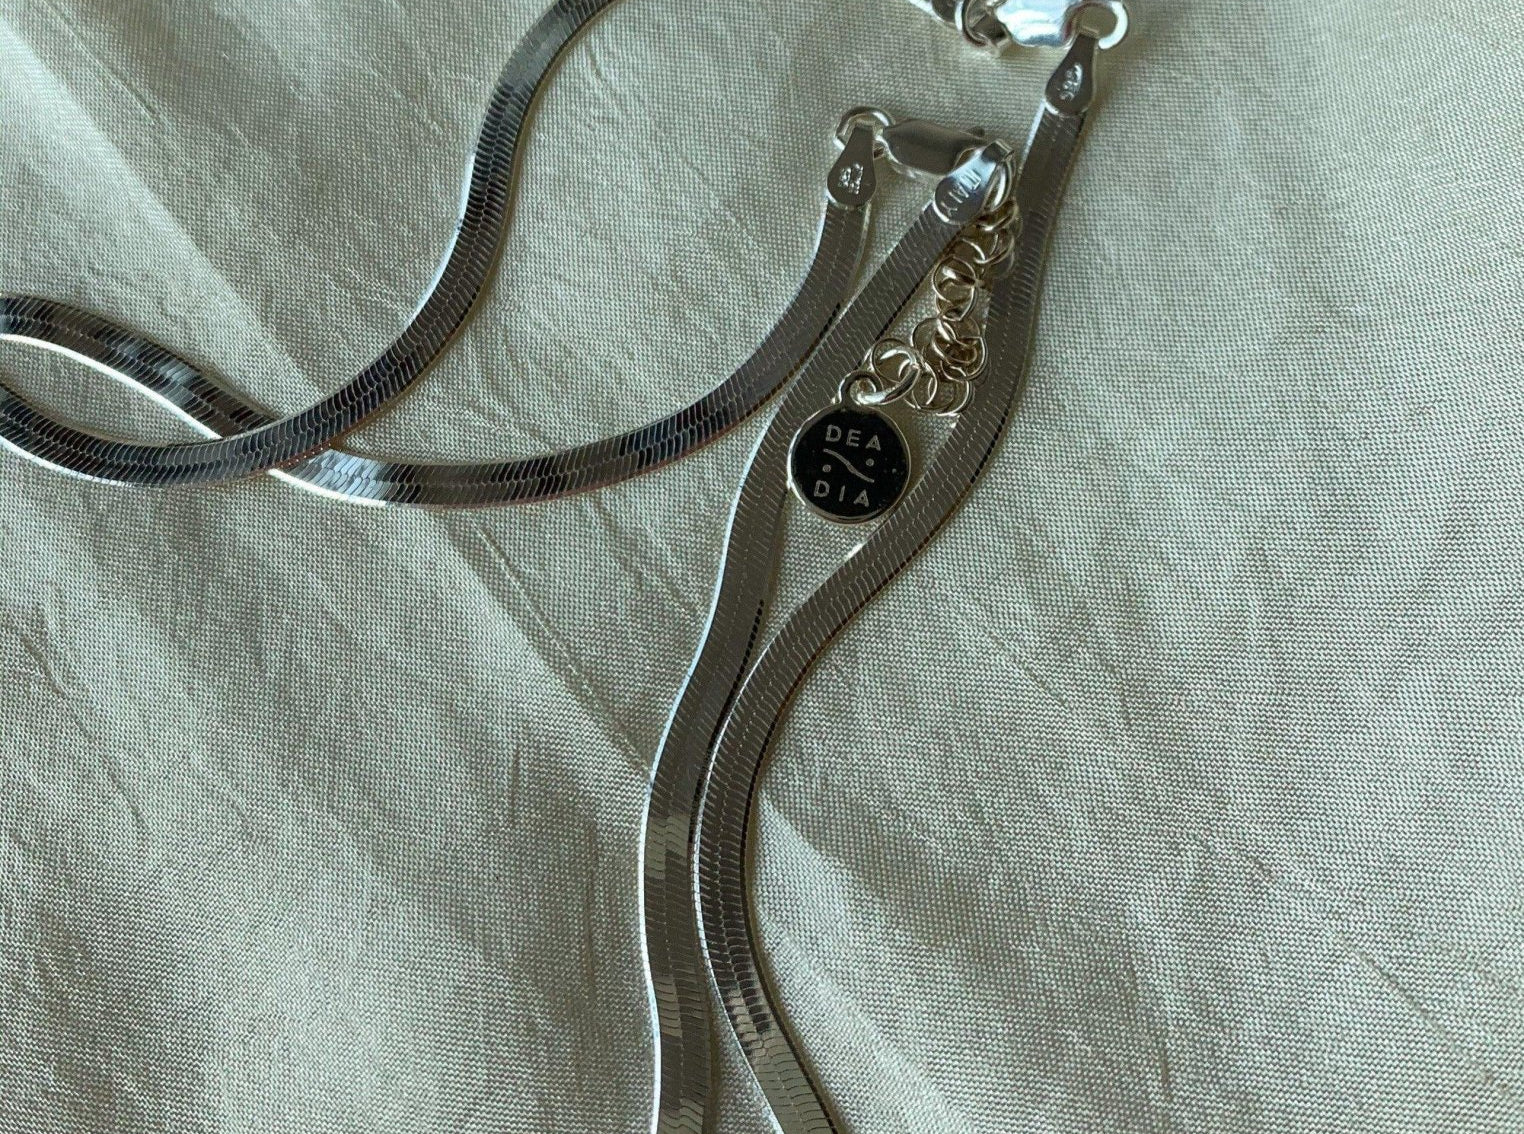 Slinky Silver Herringbone Chain Necklace - Dea Dia